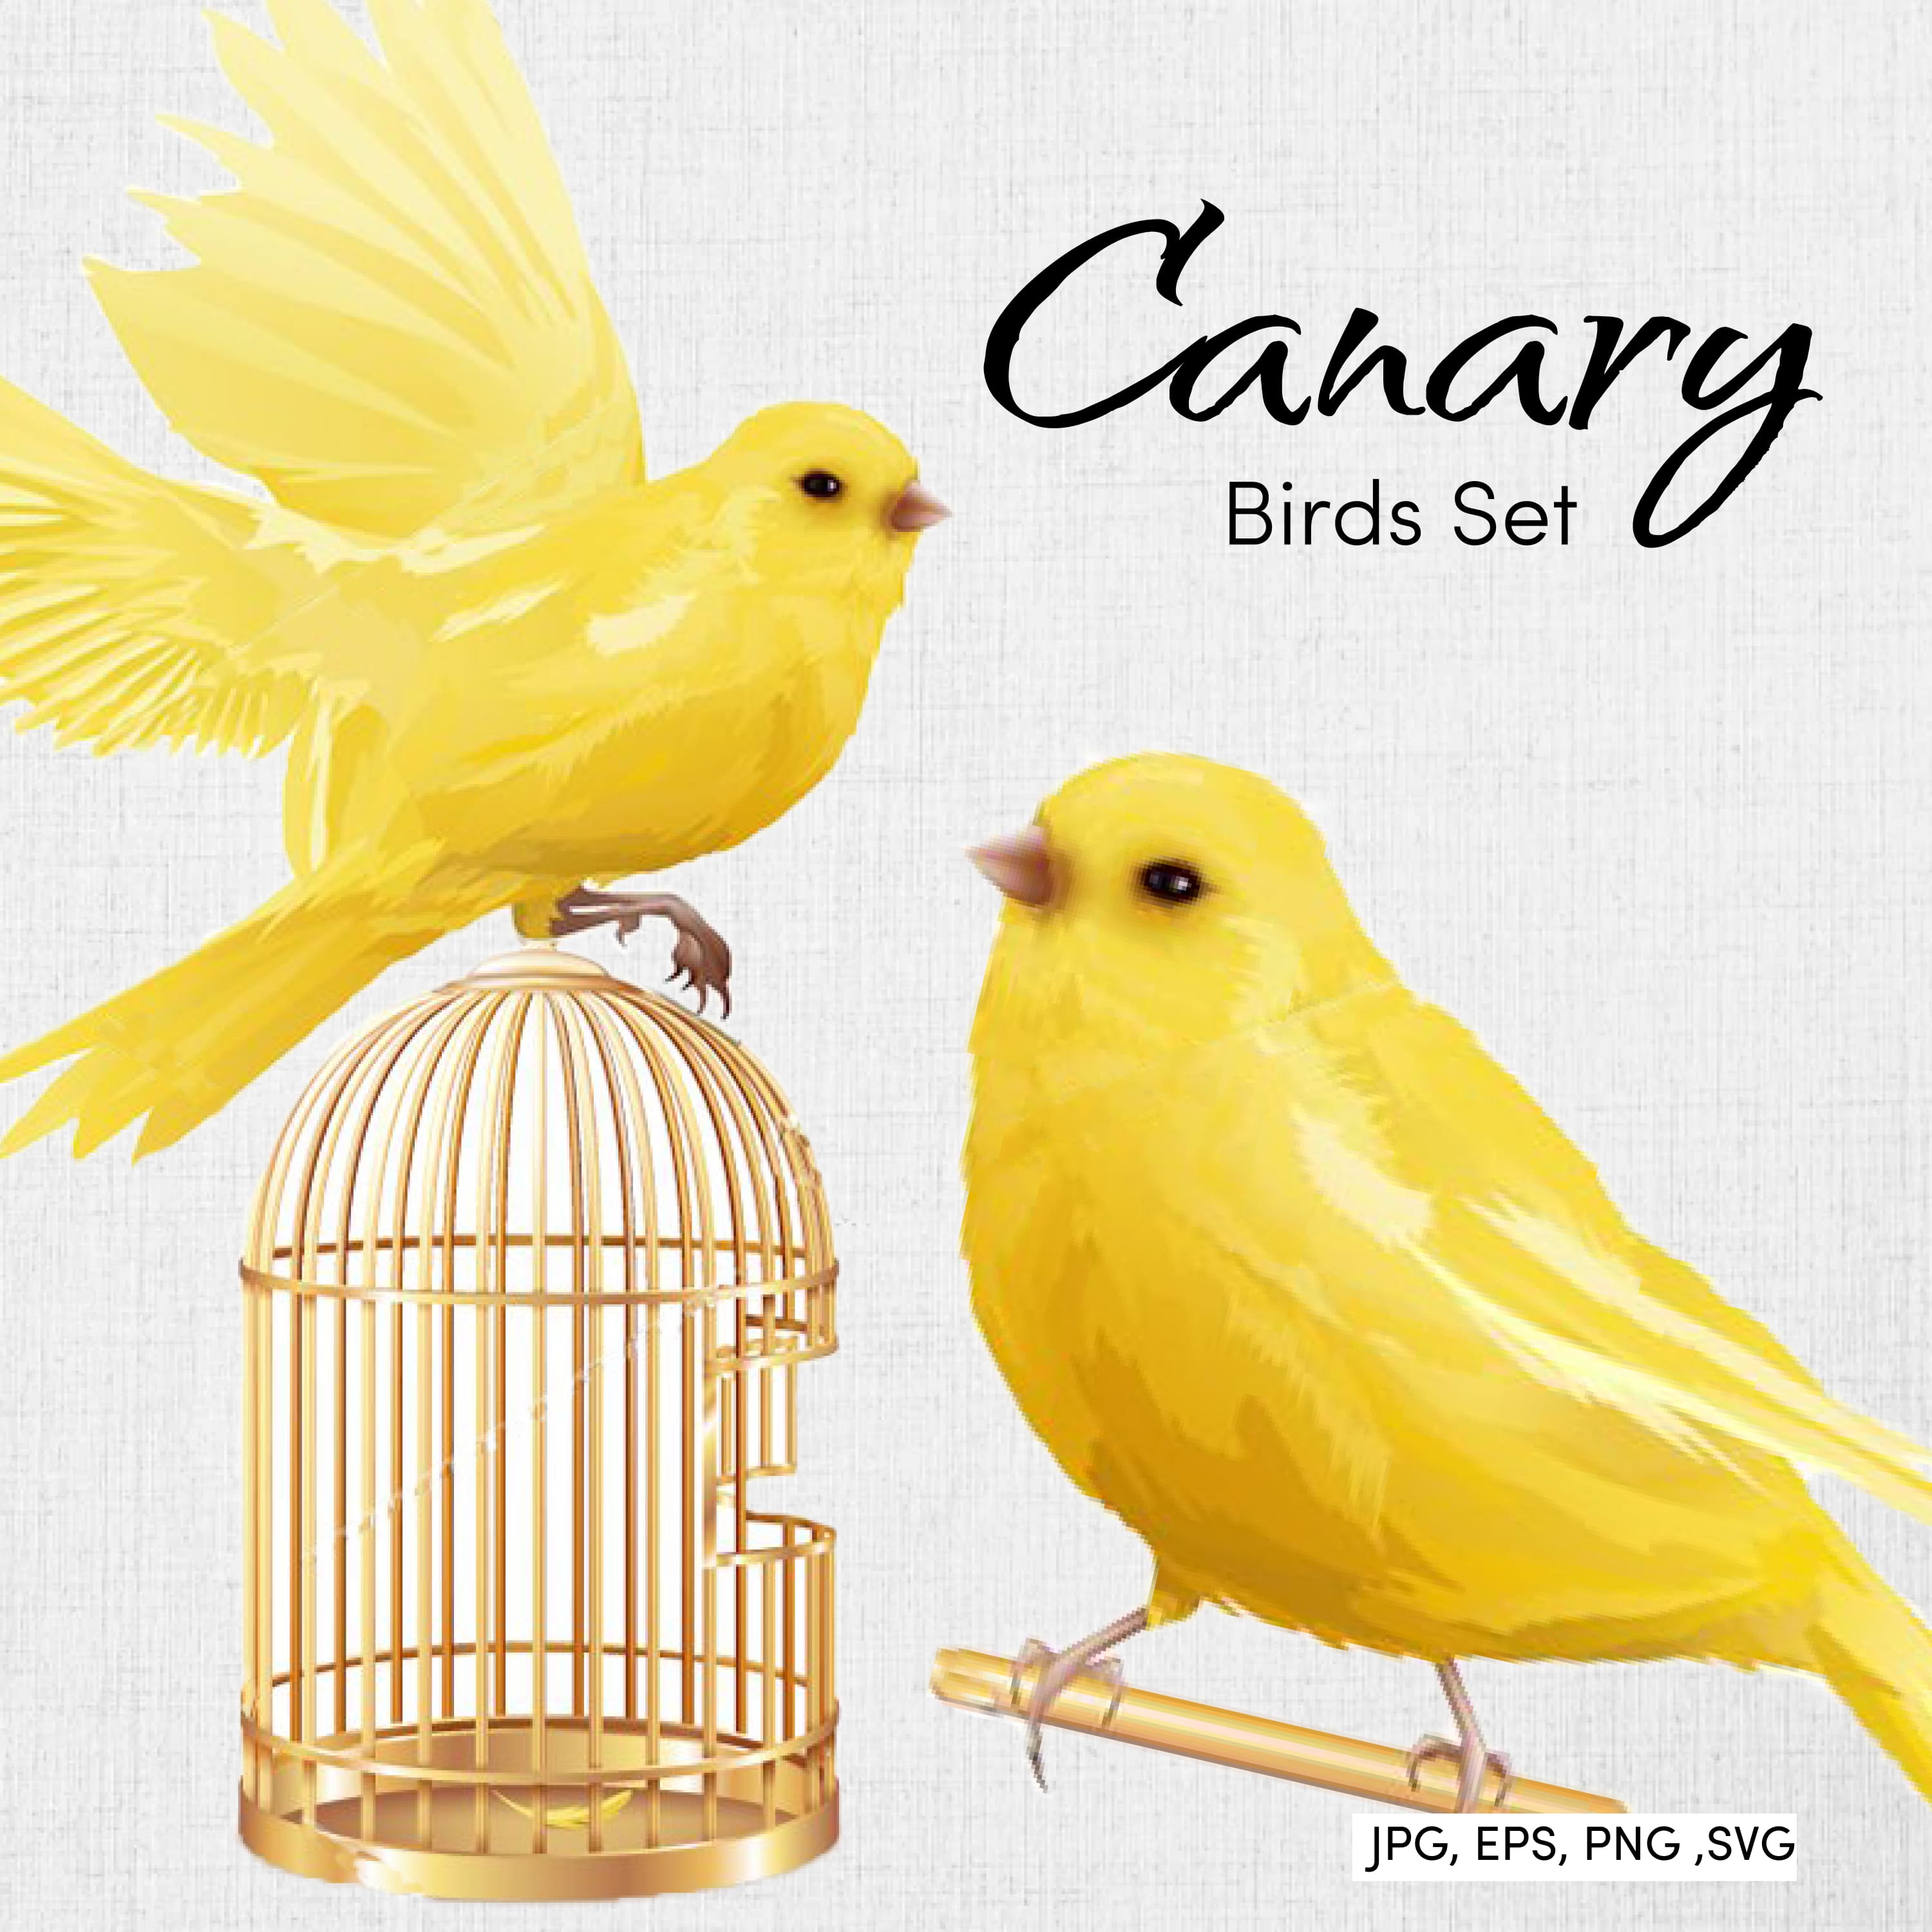 Canary Birds Set.